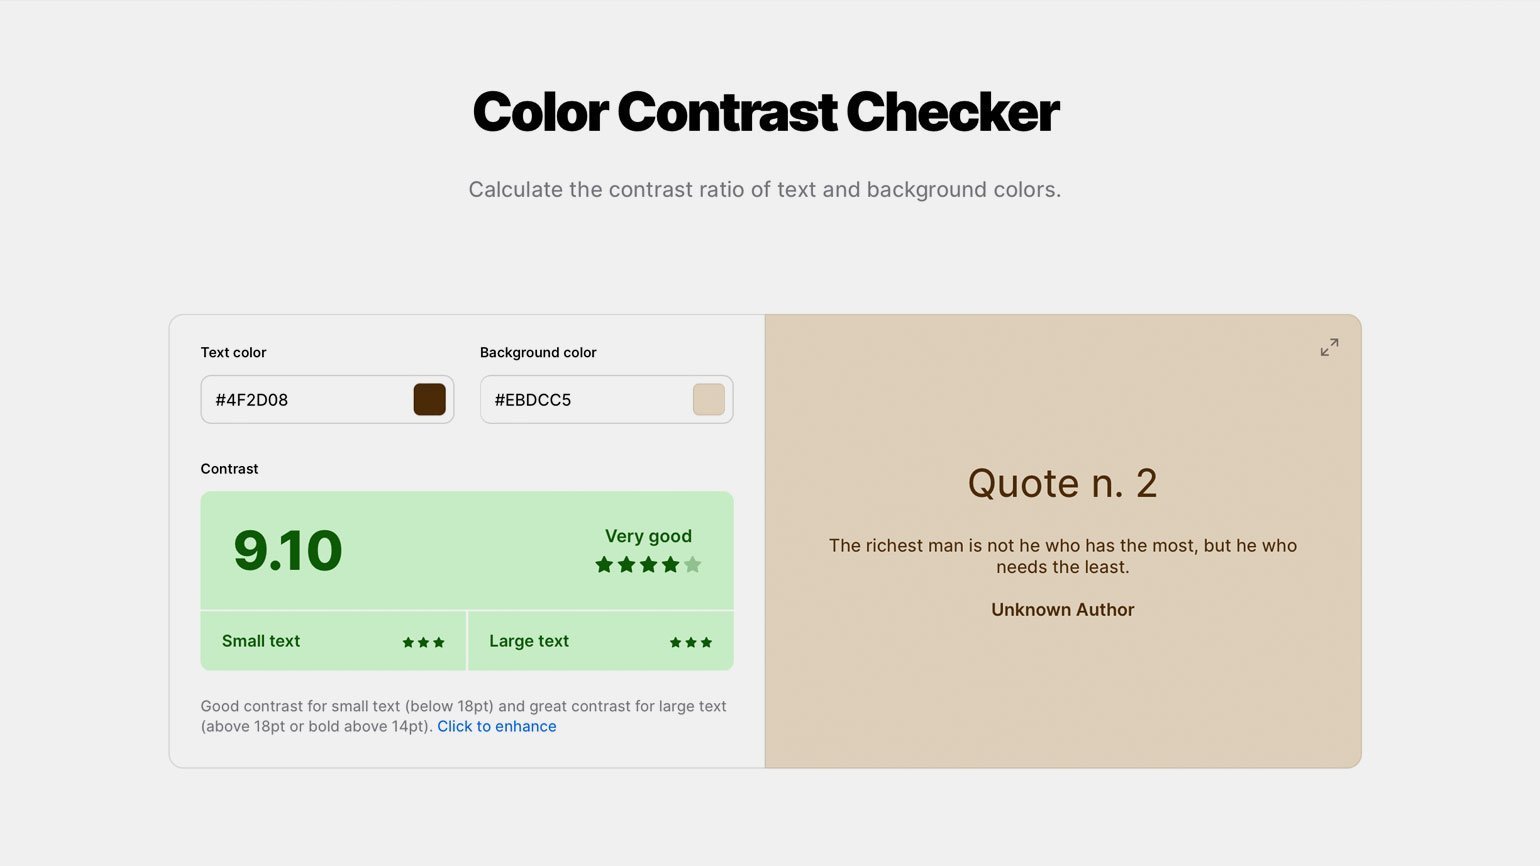 проверка контраста цвета шрифта и цвета фона для дизайна сайта